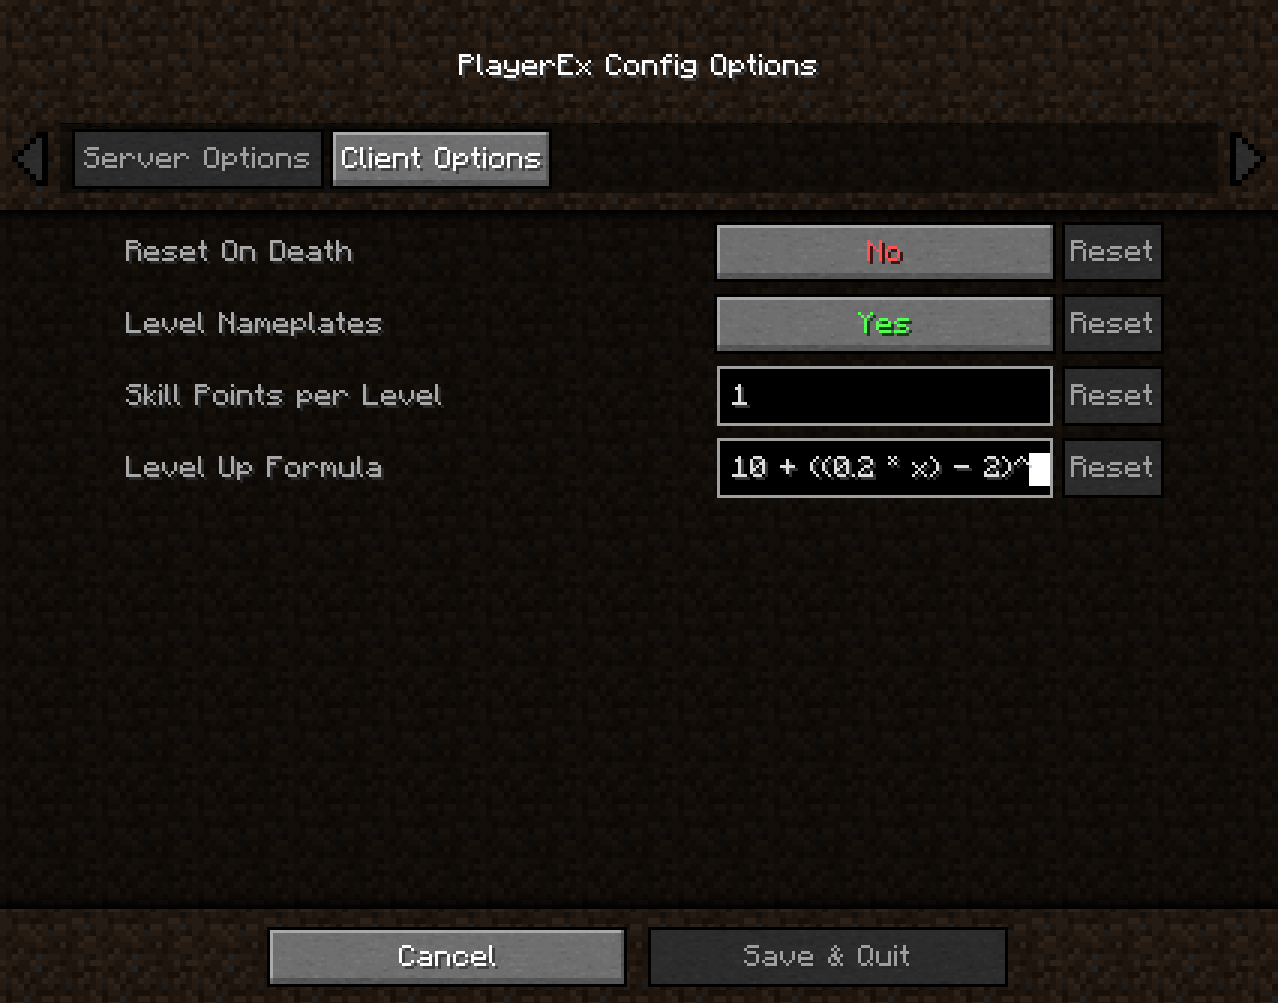 PlayerEx - Minecraft Mod